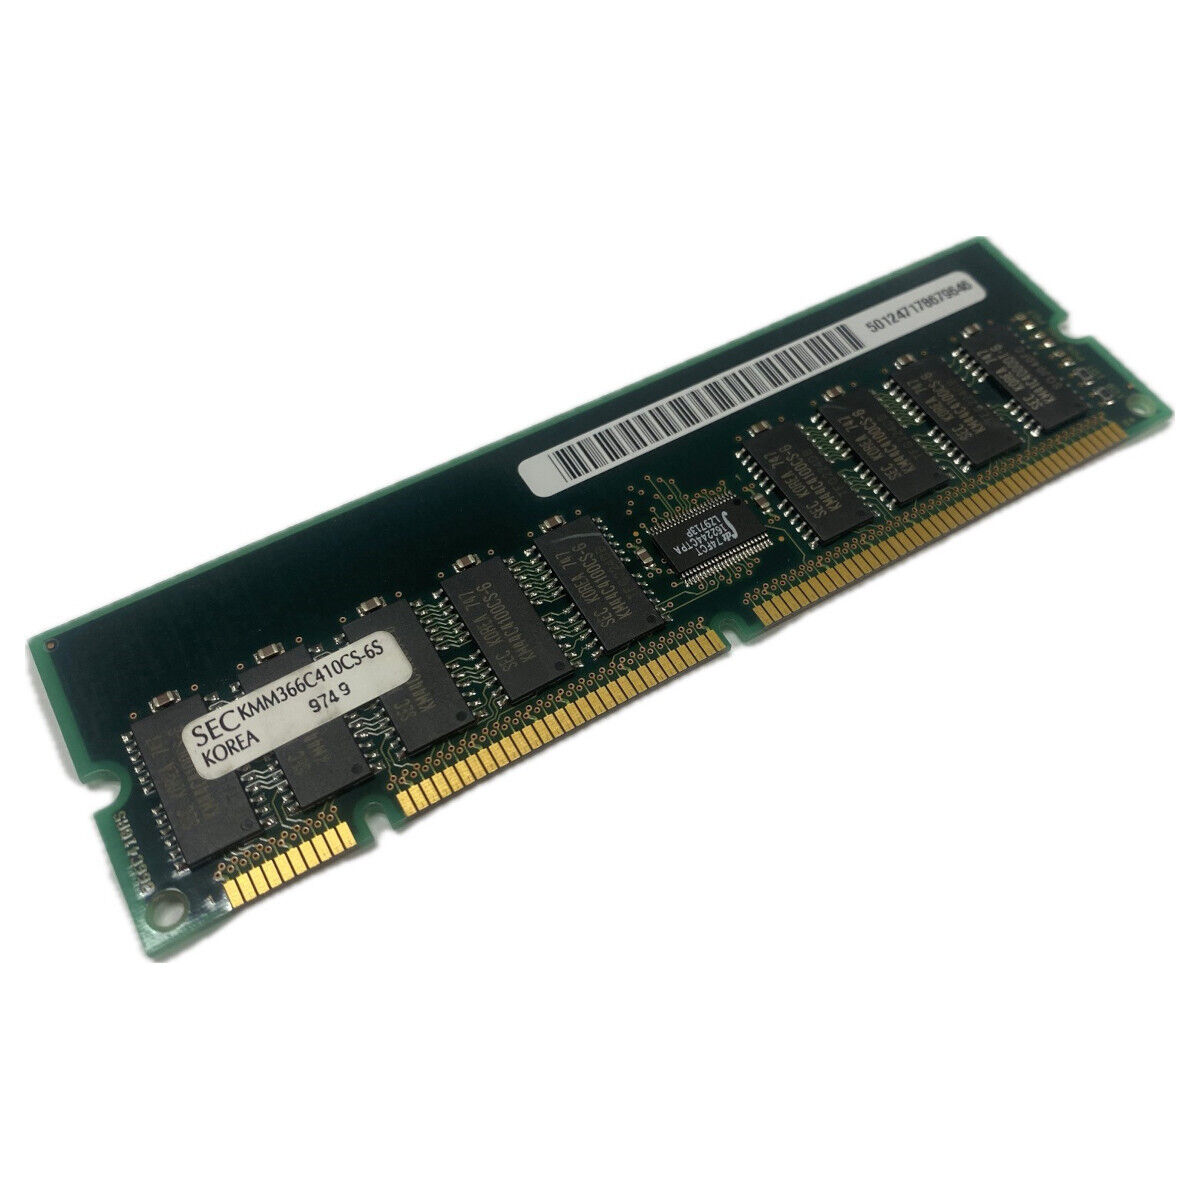 Sun 501-2471 Memory 32MB FastPage FP ECC DIMM